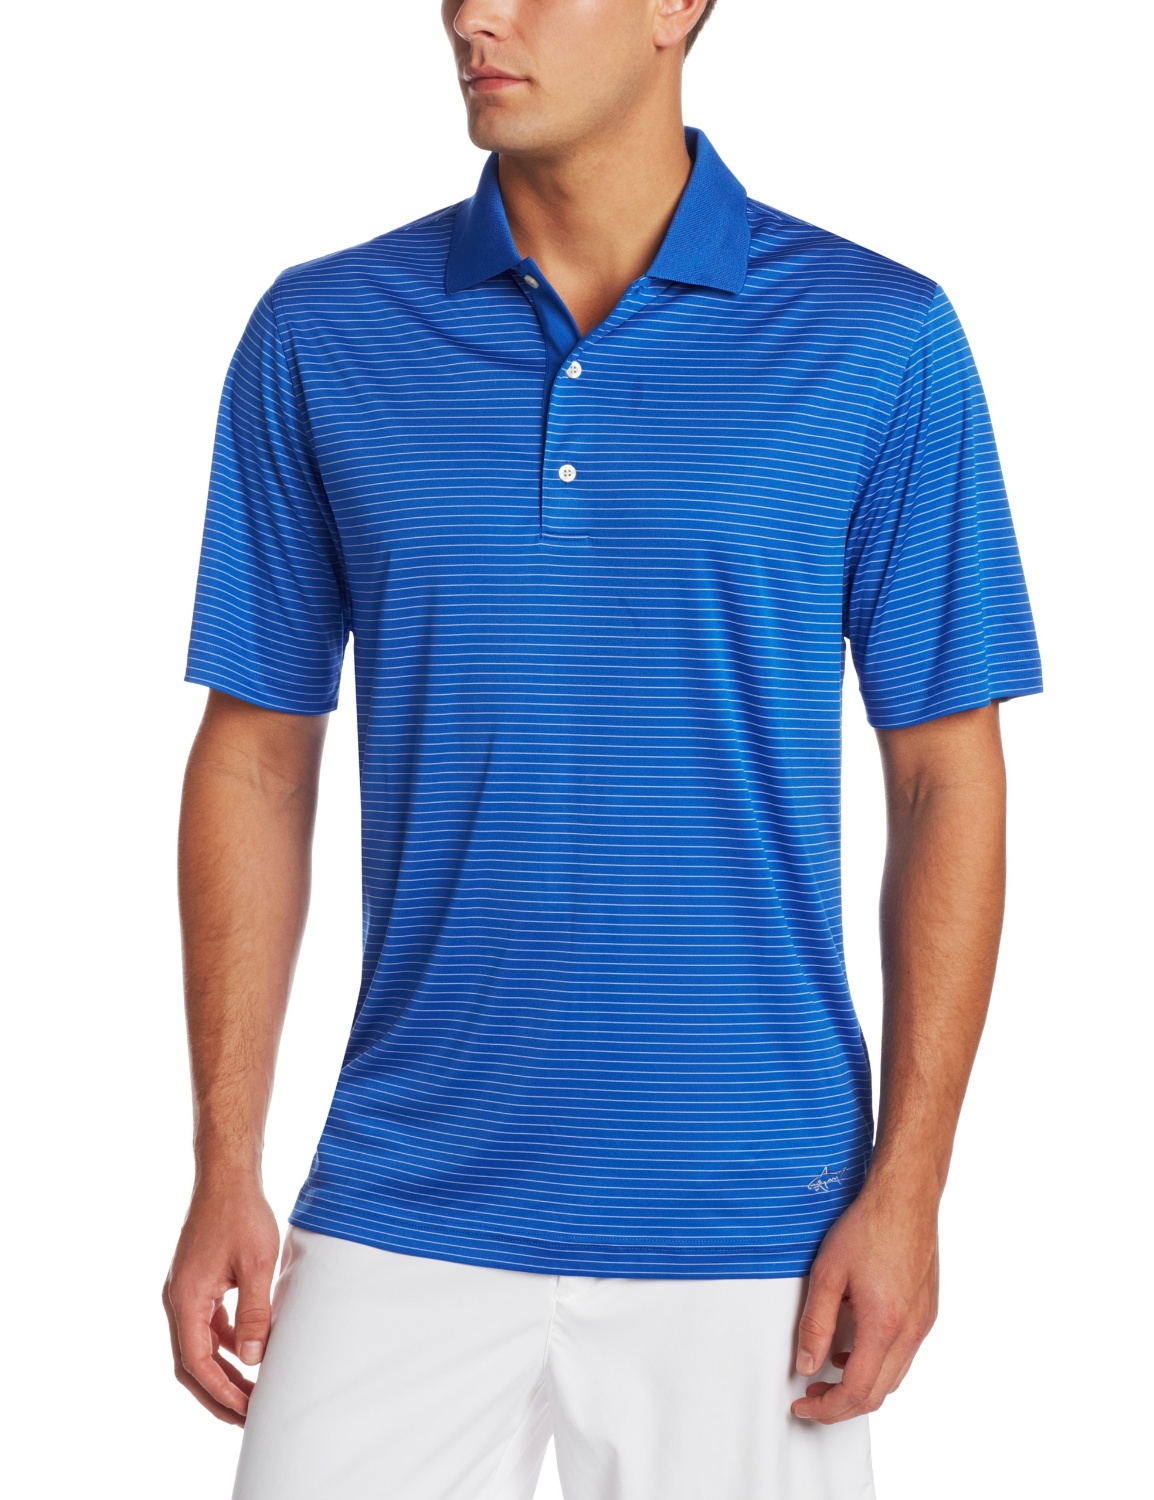 Greg Norman Mens Fine Line Stripe Golf Polo Shirts